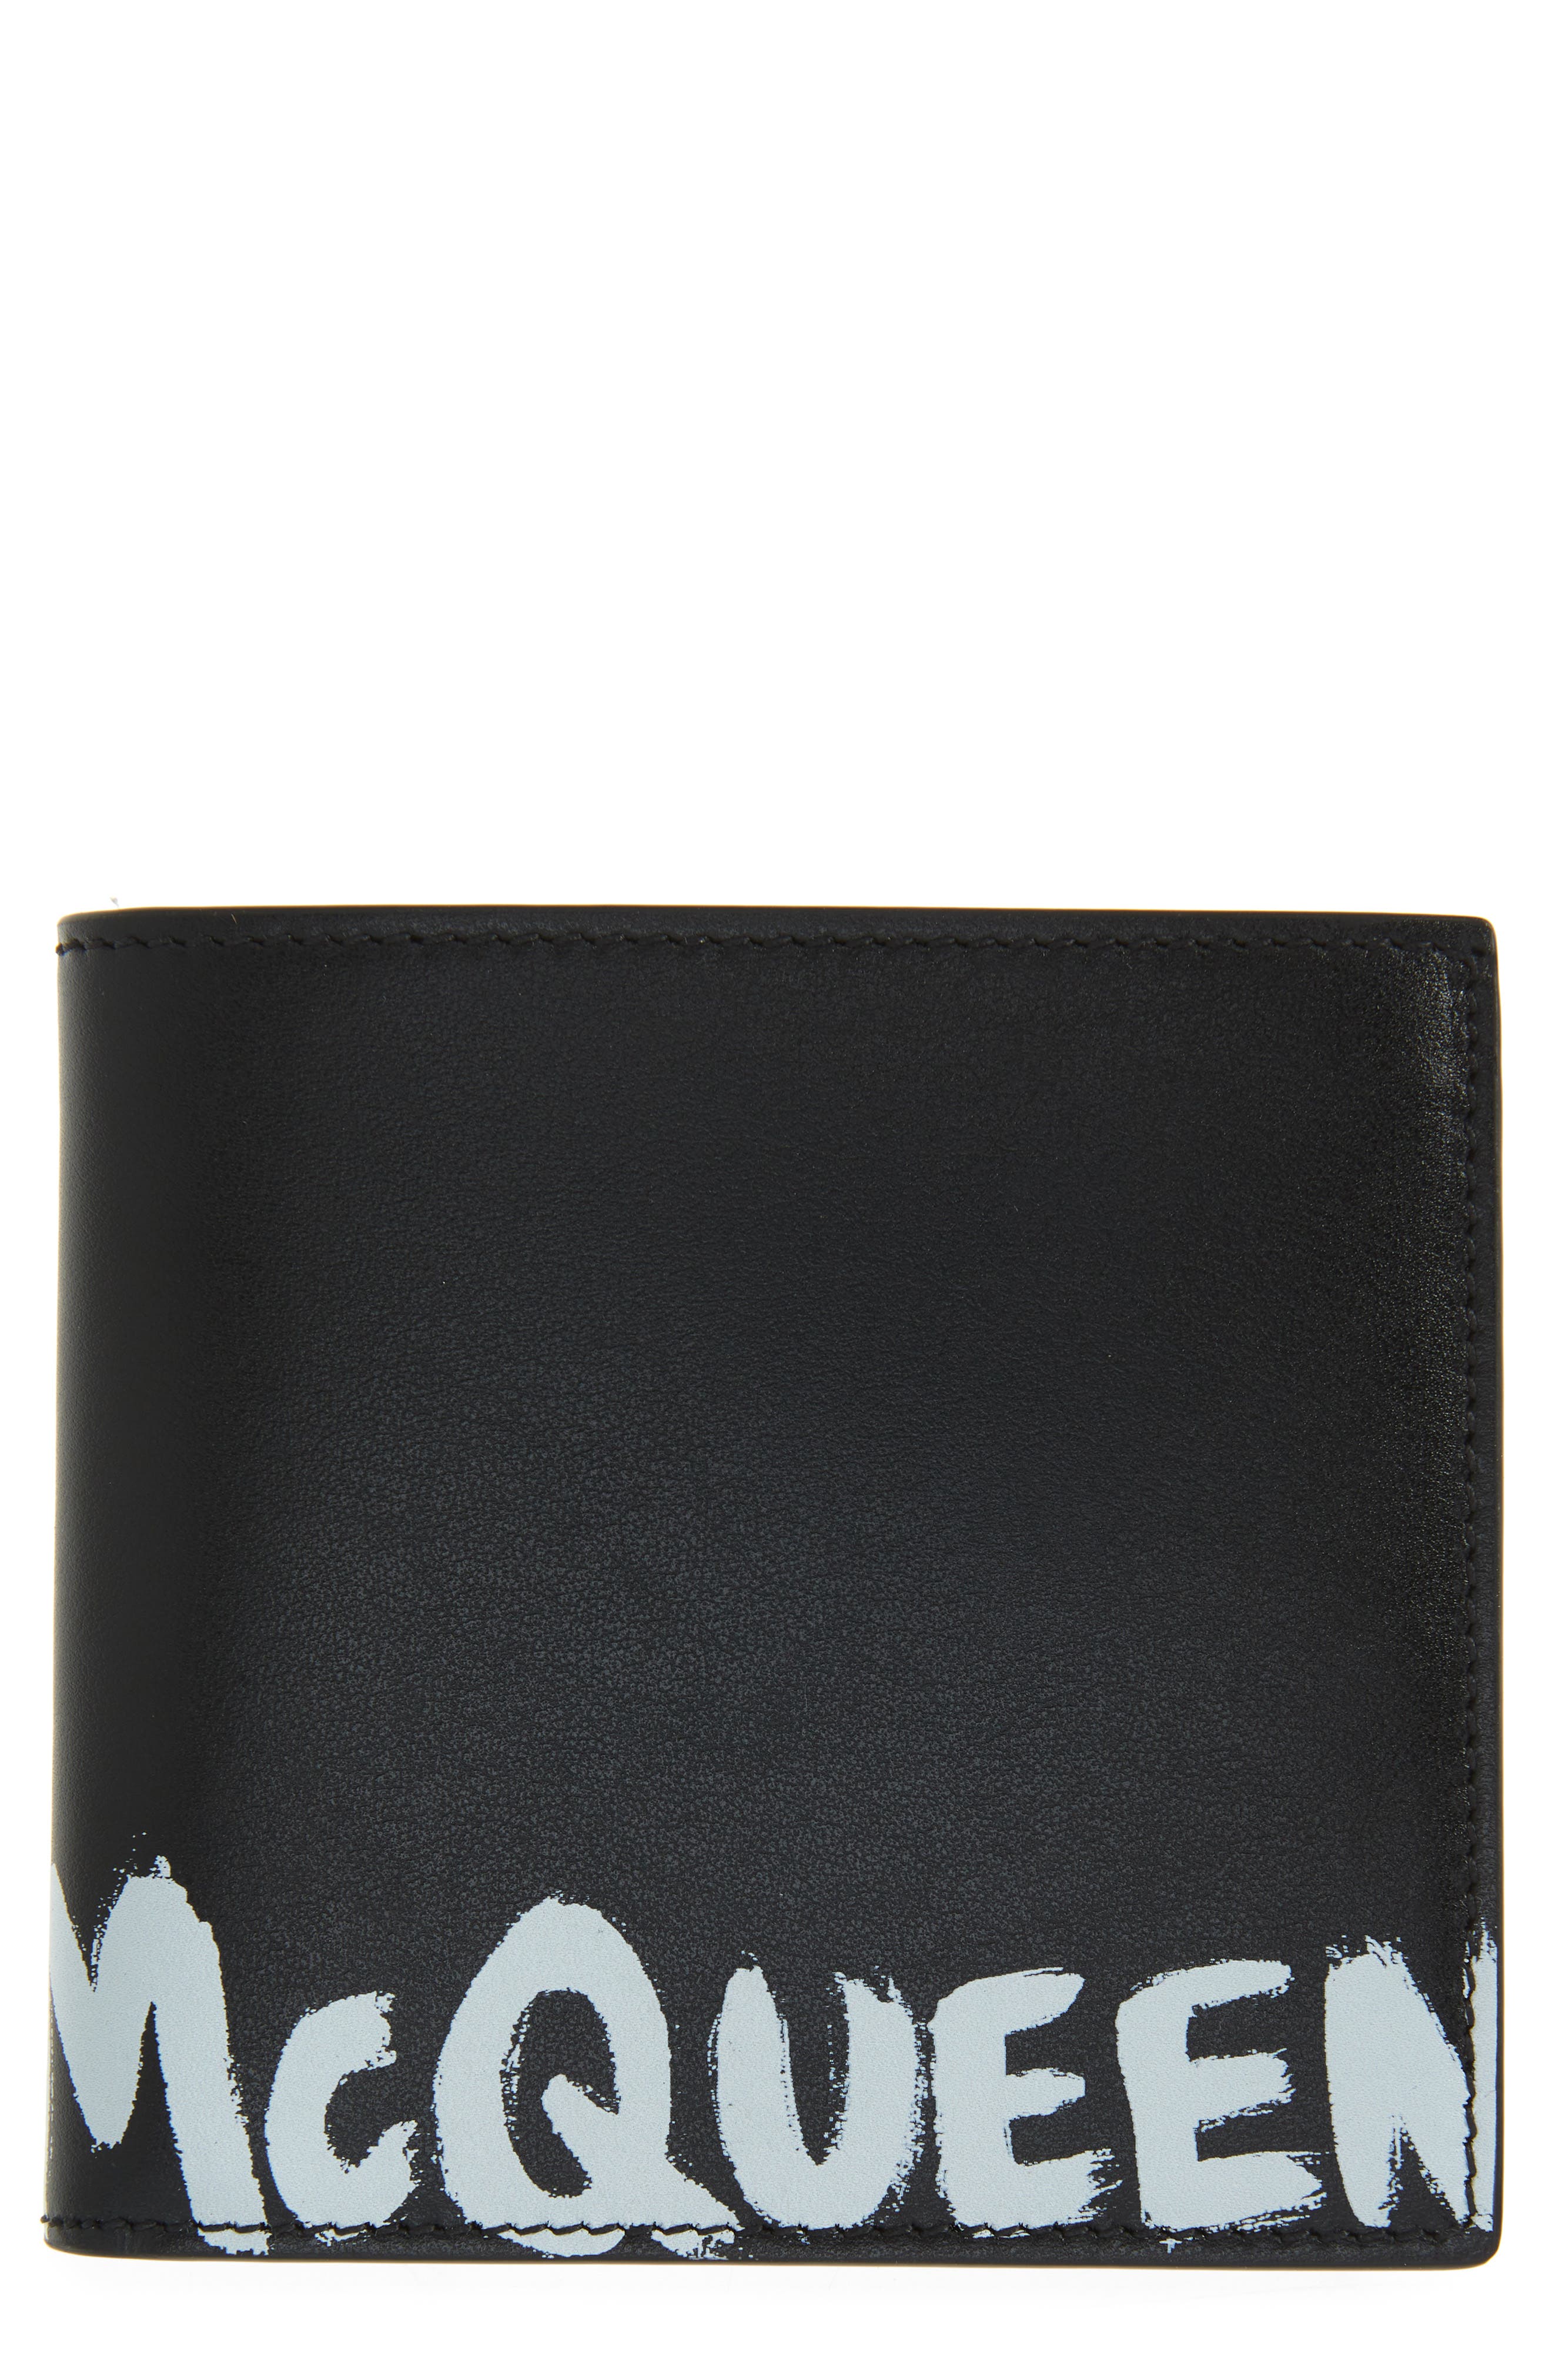 Alexander McQueen Graffiti Logo Leather Bifold Wallet in Black/White at Nordstrom